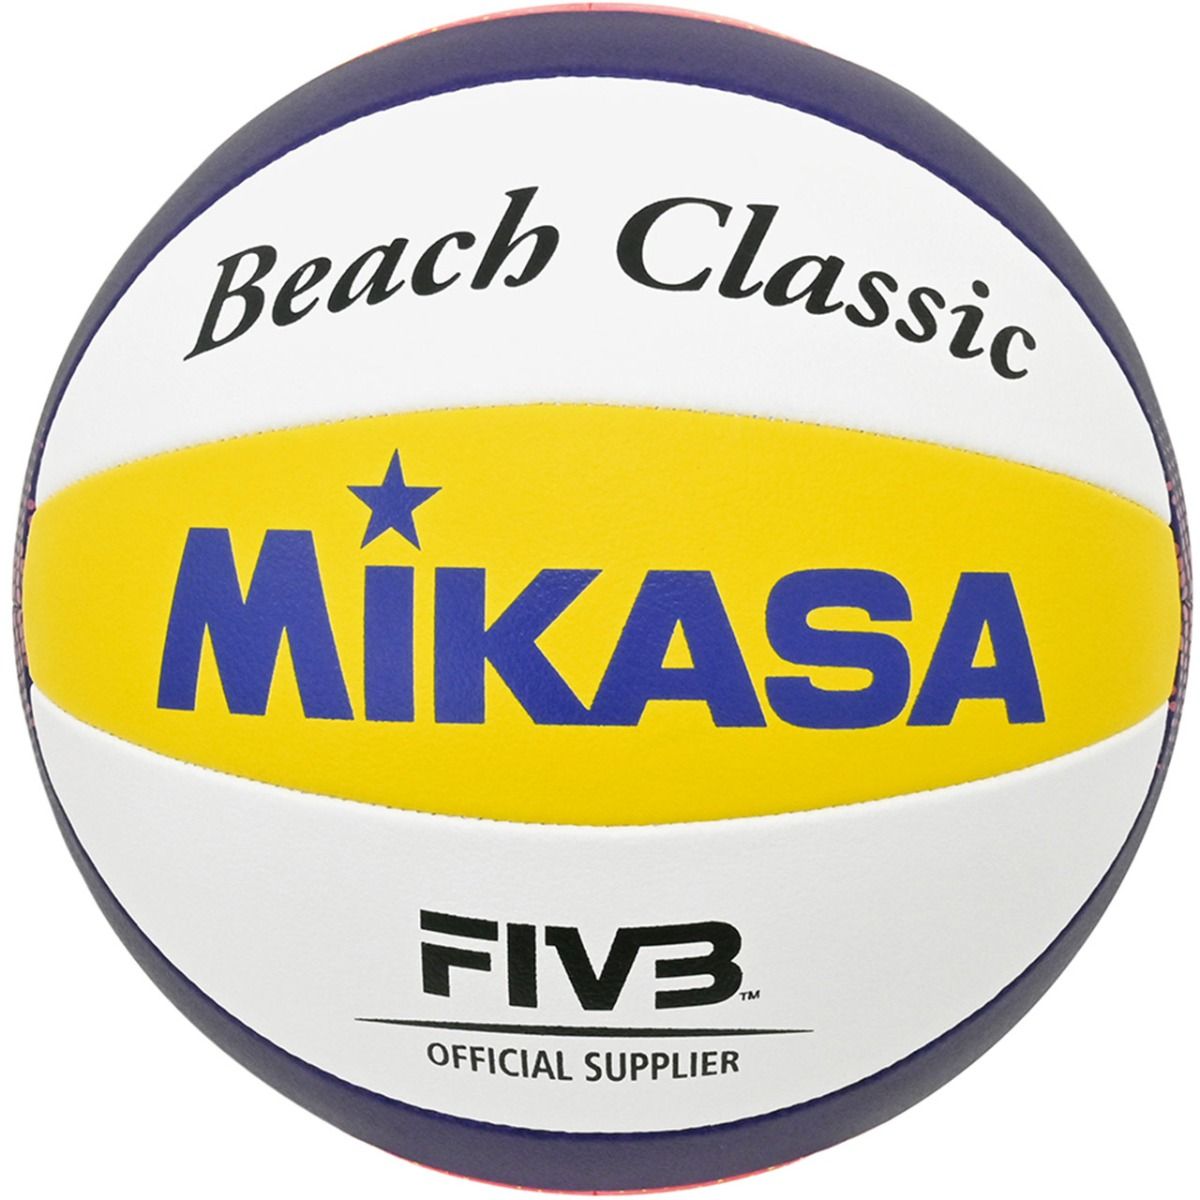 Mikasa Volleyball Beach Classic BV551C-WYBR